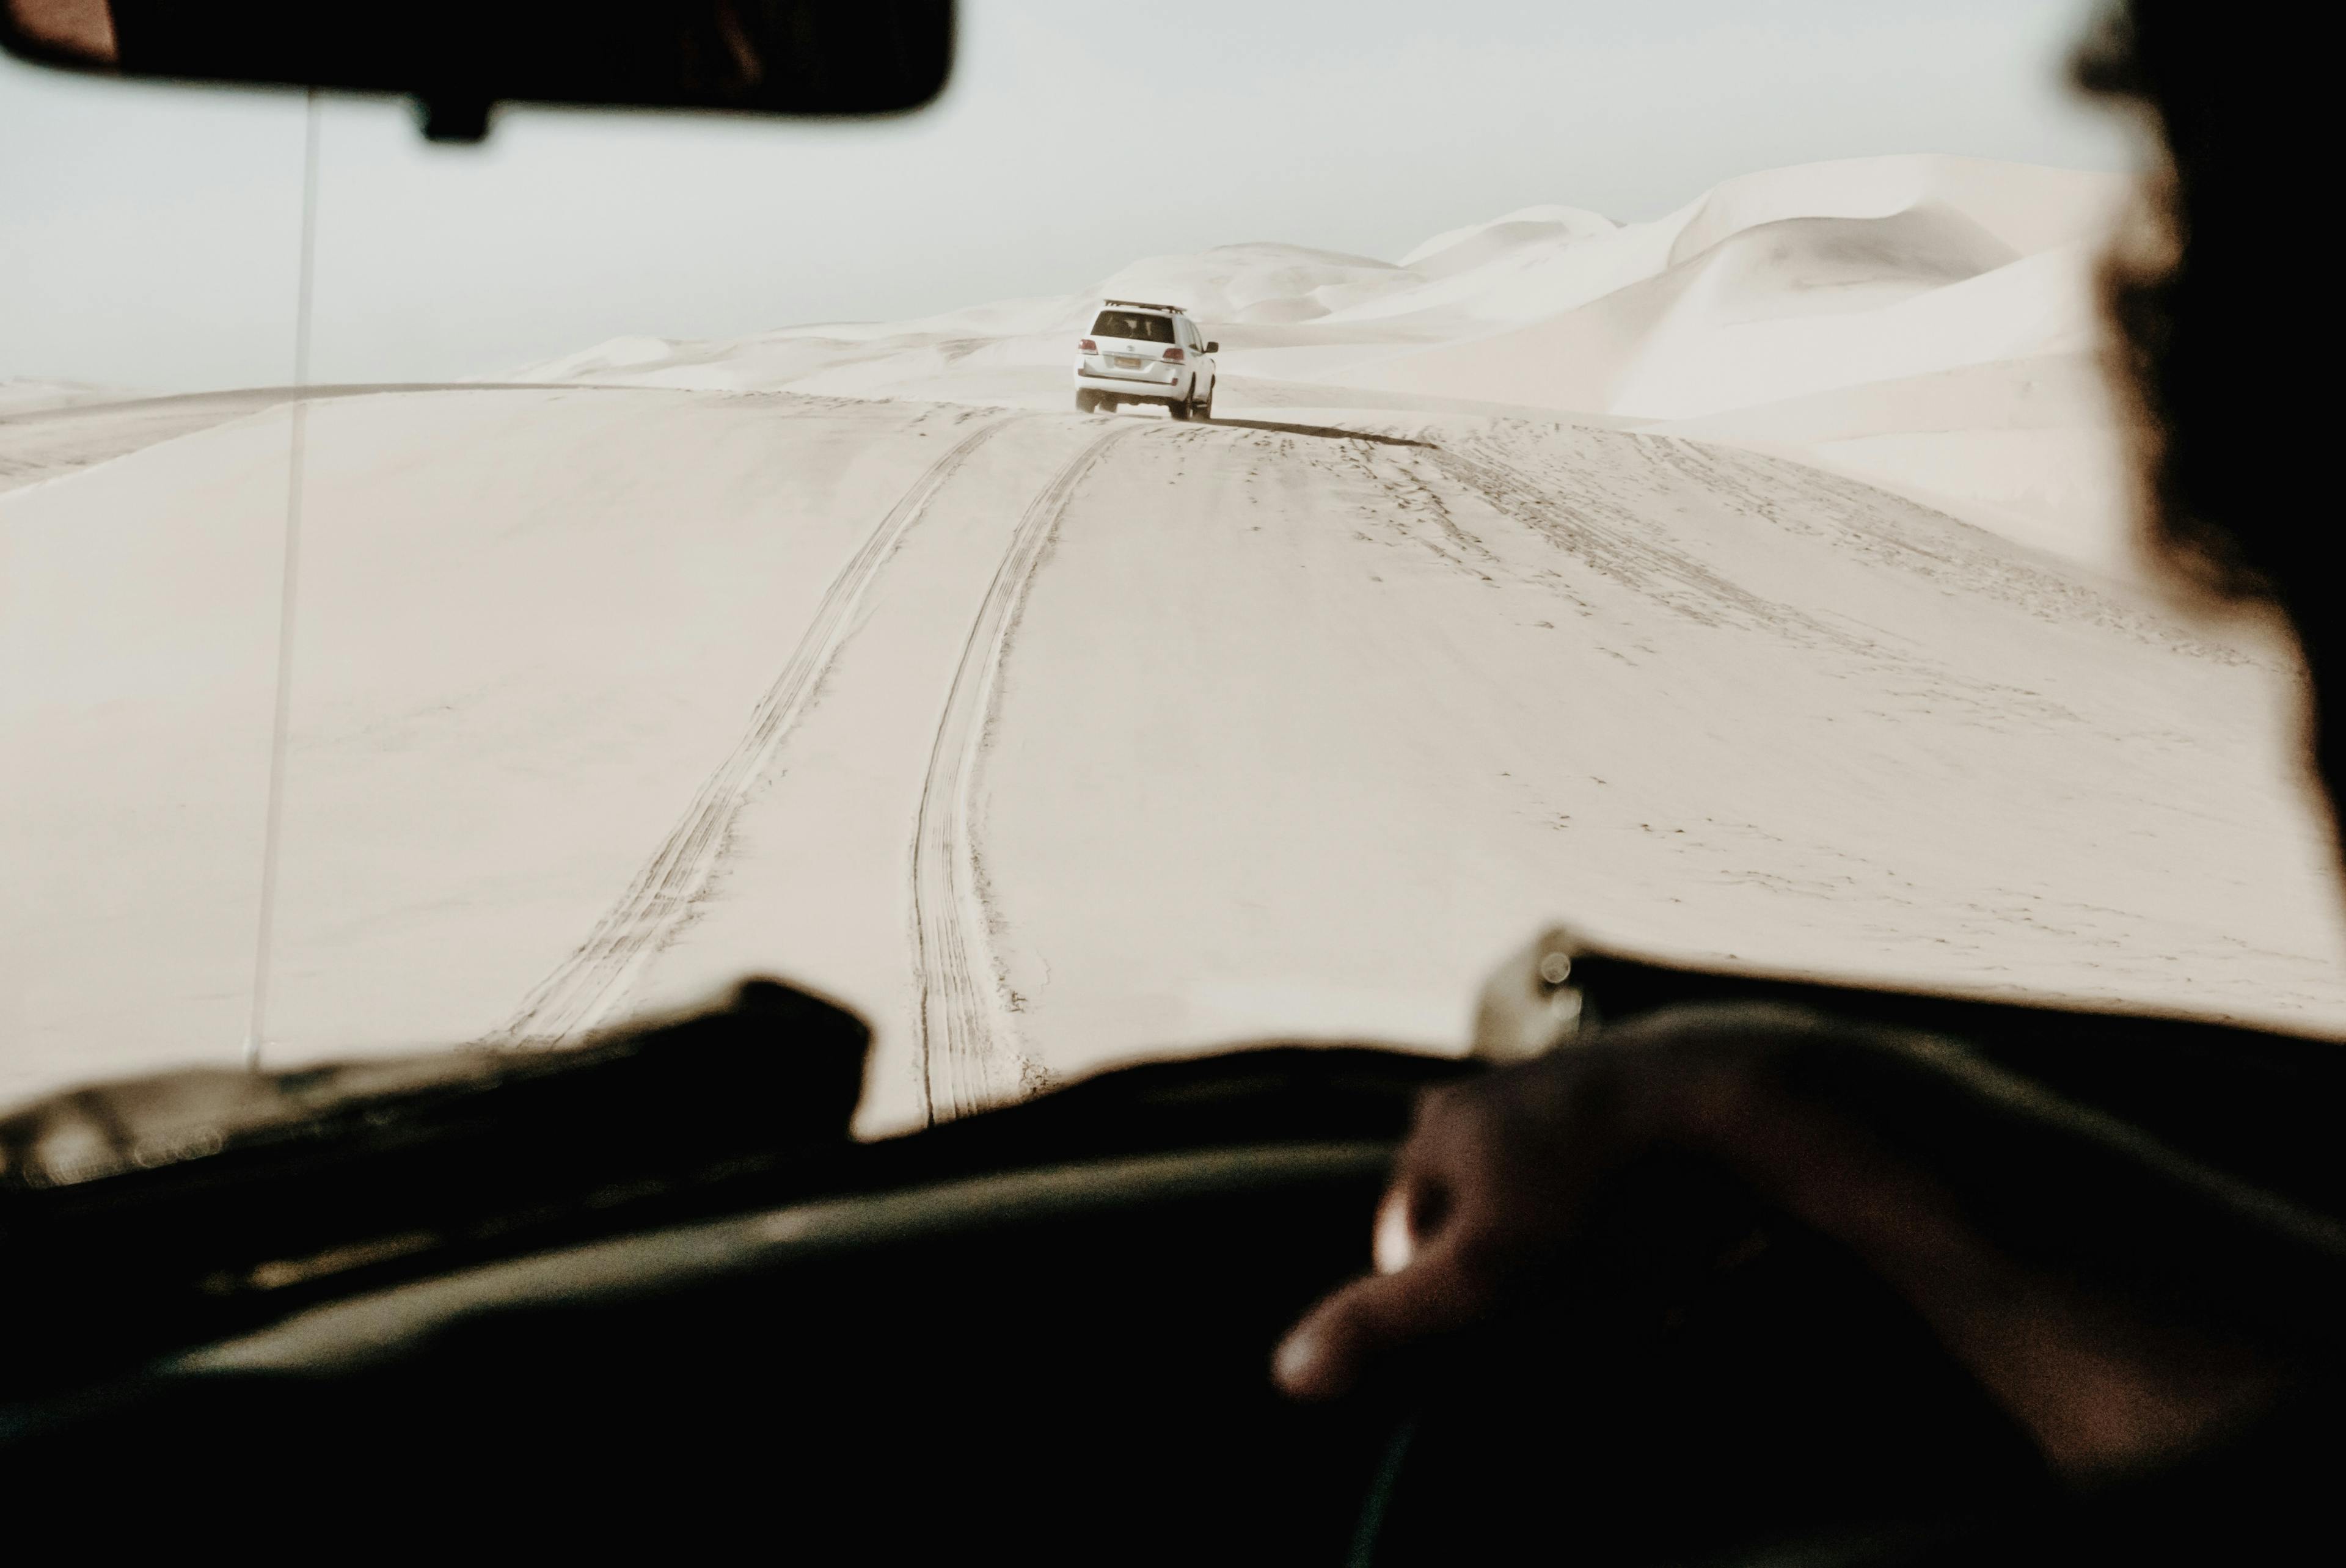 Car ride trough the desert